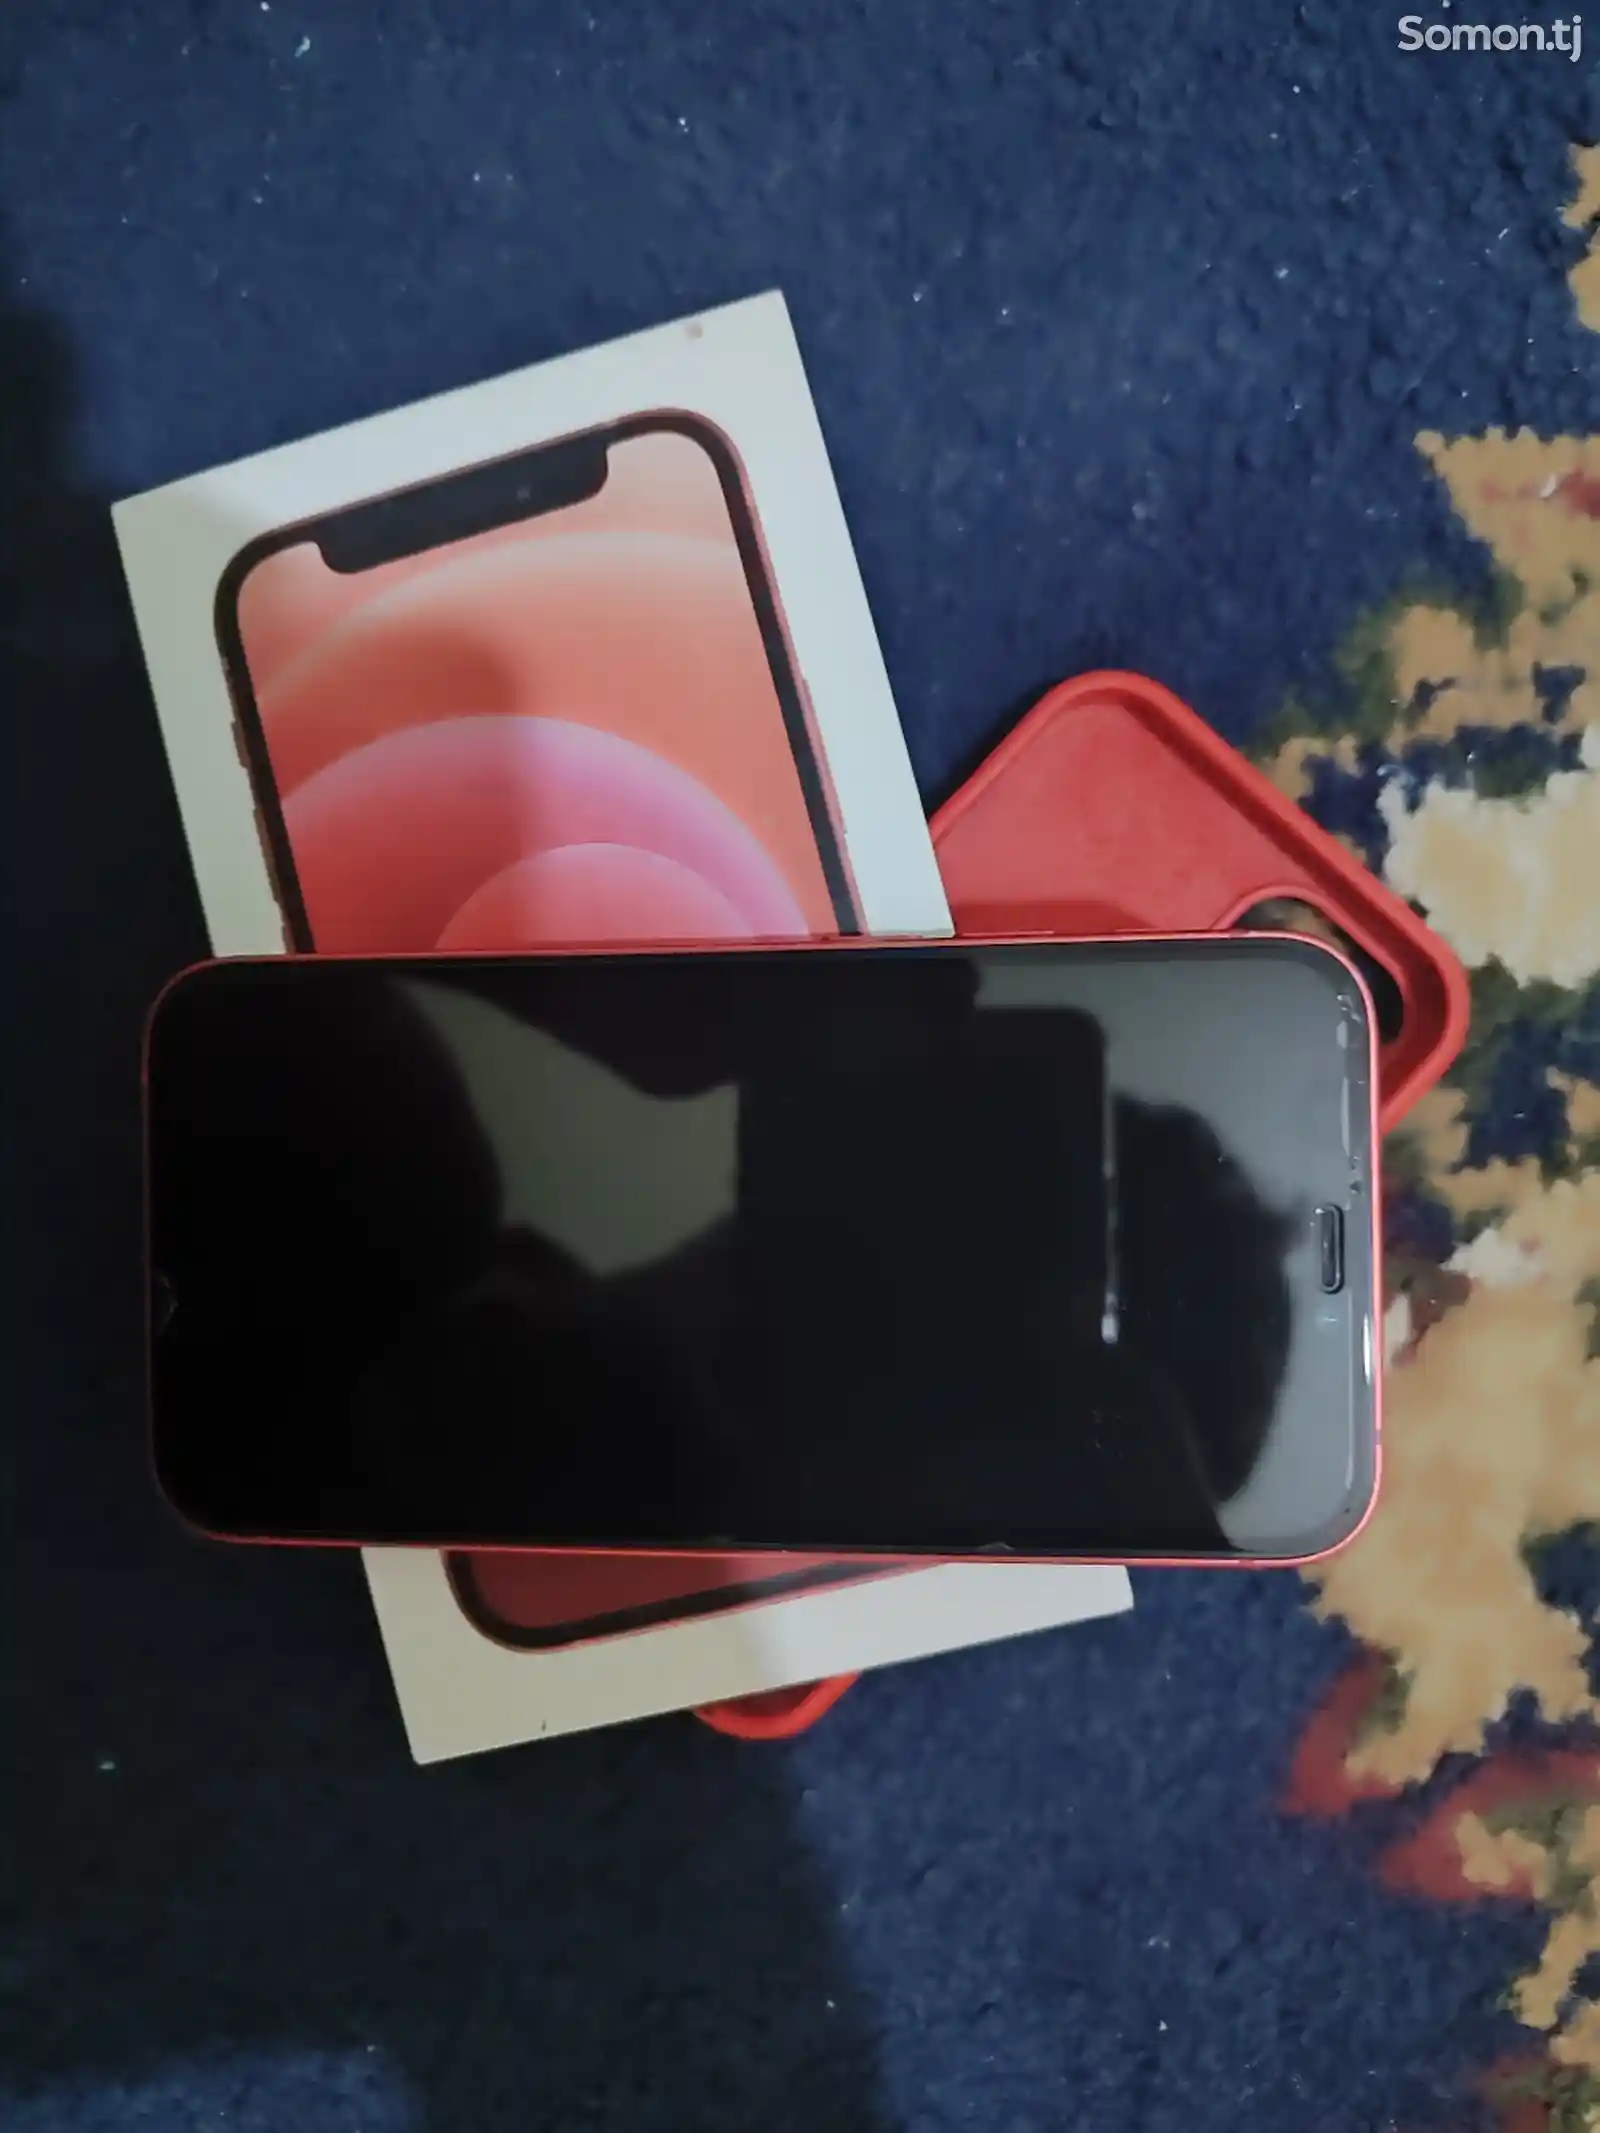 Apple iPhone 12 mini, 64 gb, Product Red-1